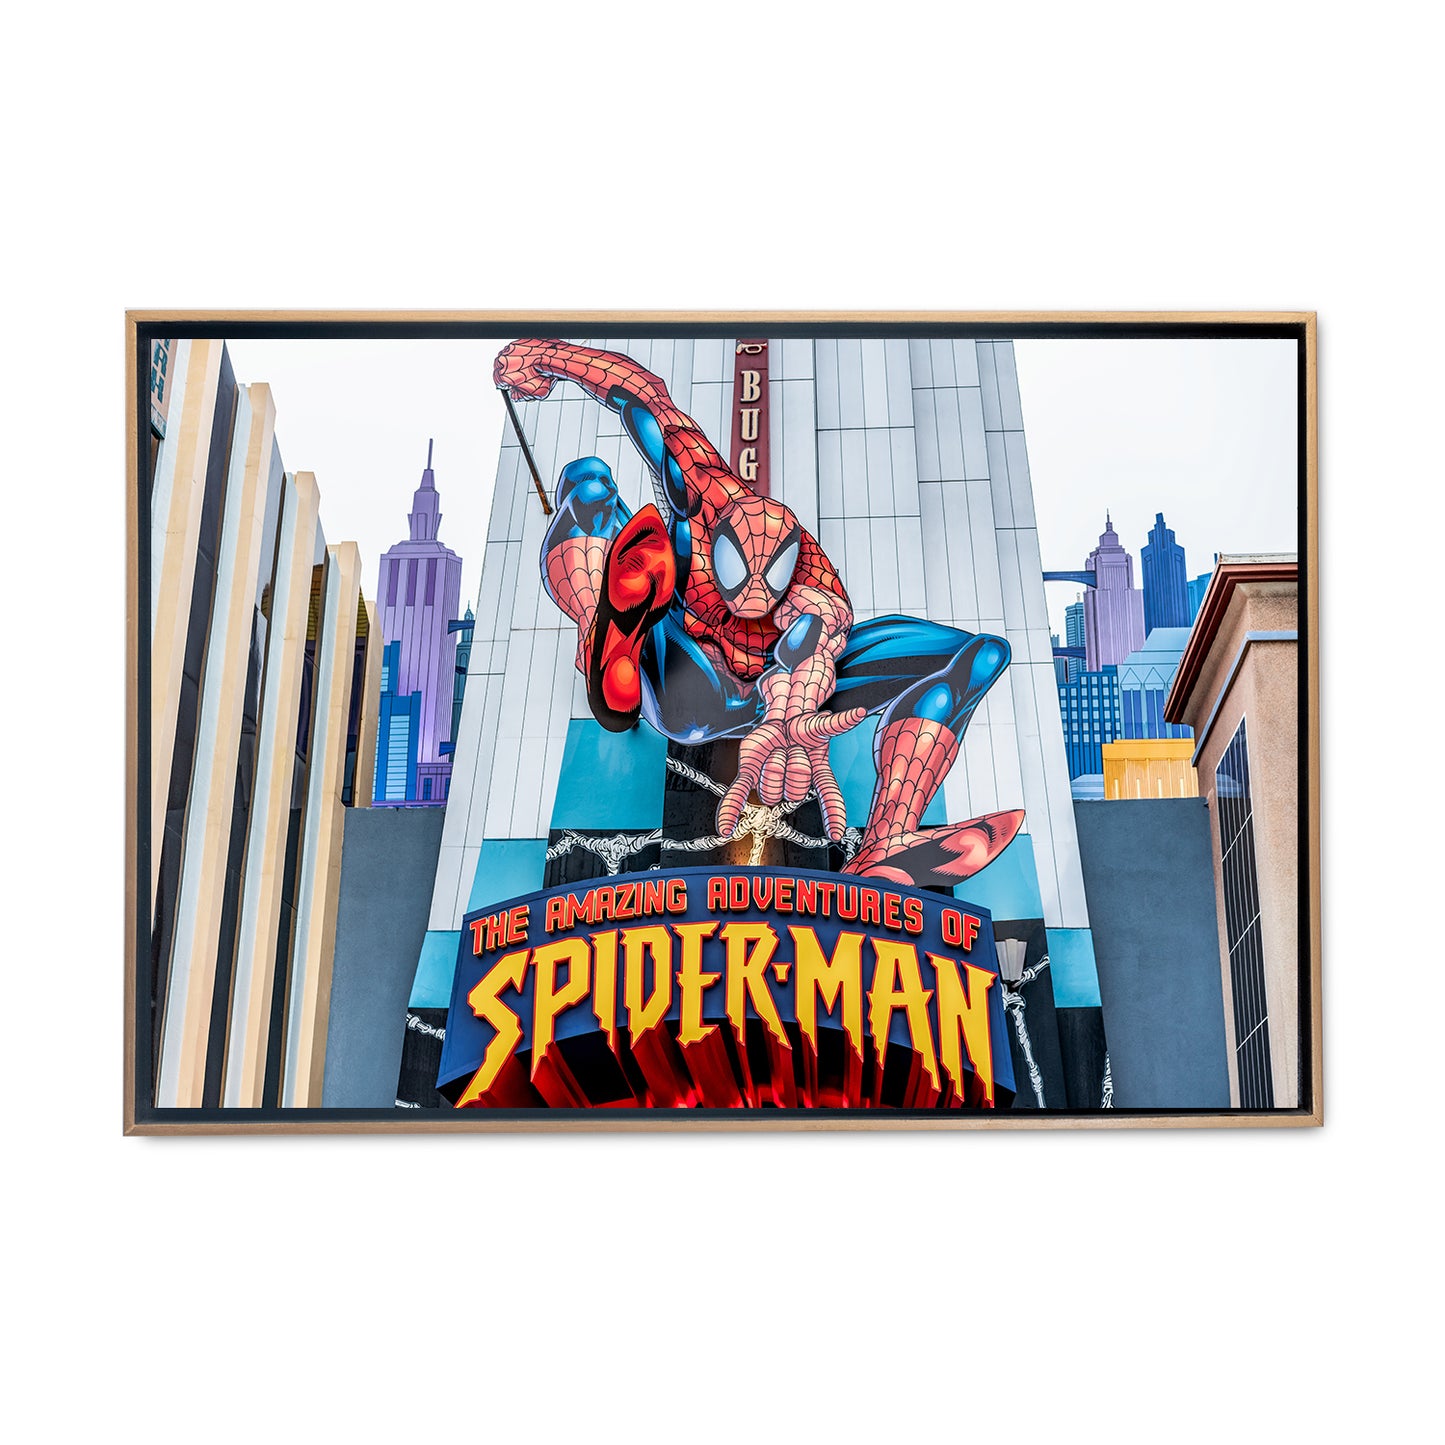 Spiderman - Maxigráfica Shop